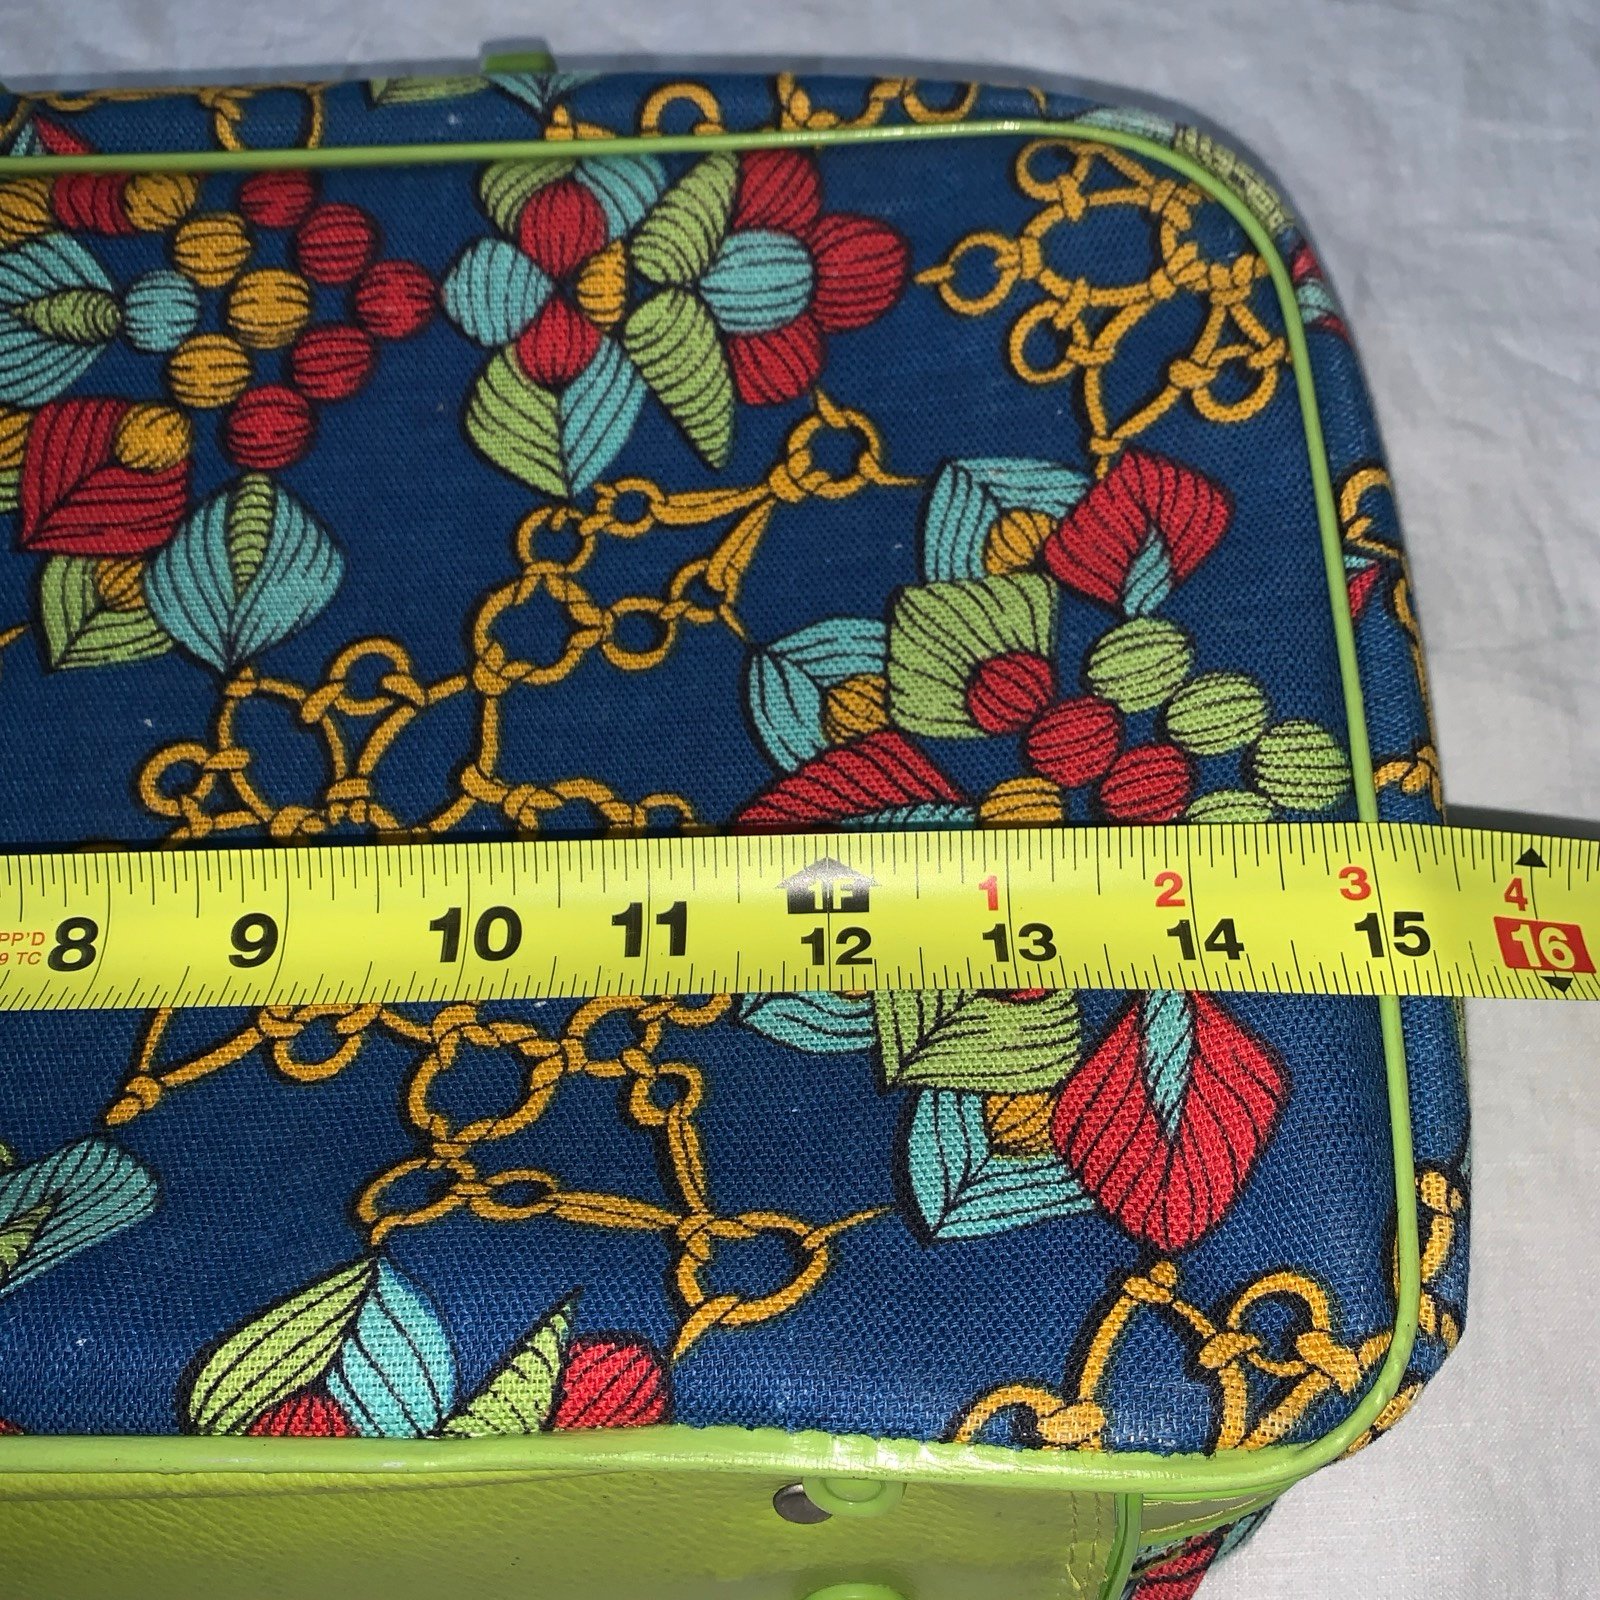 Penguin Travelers Cloth Suitcase with Lock Mod Japan Collectible Decor Vintage F4c8T2vzp